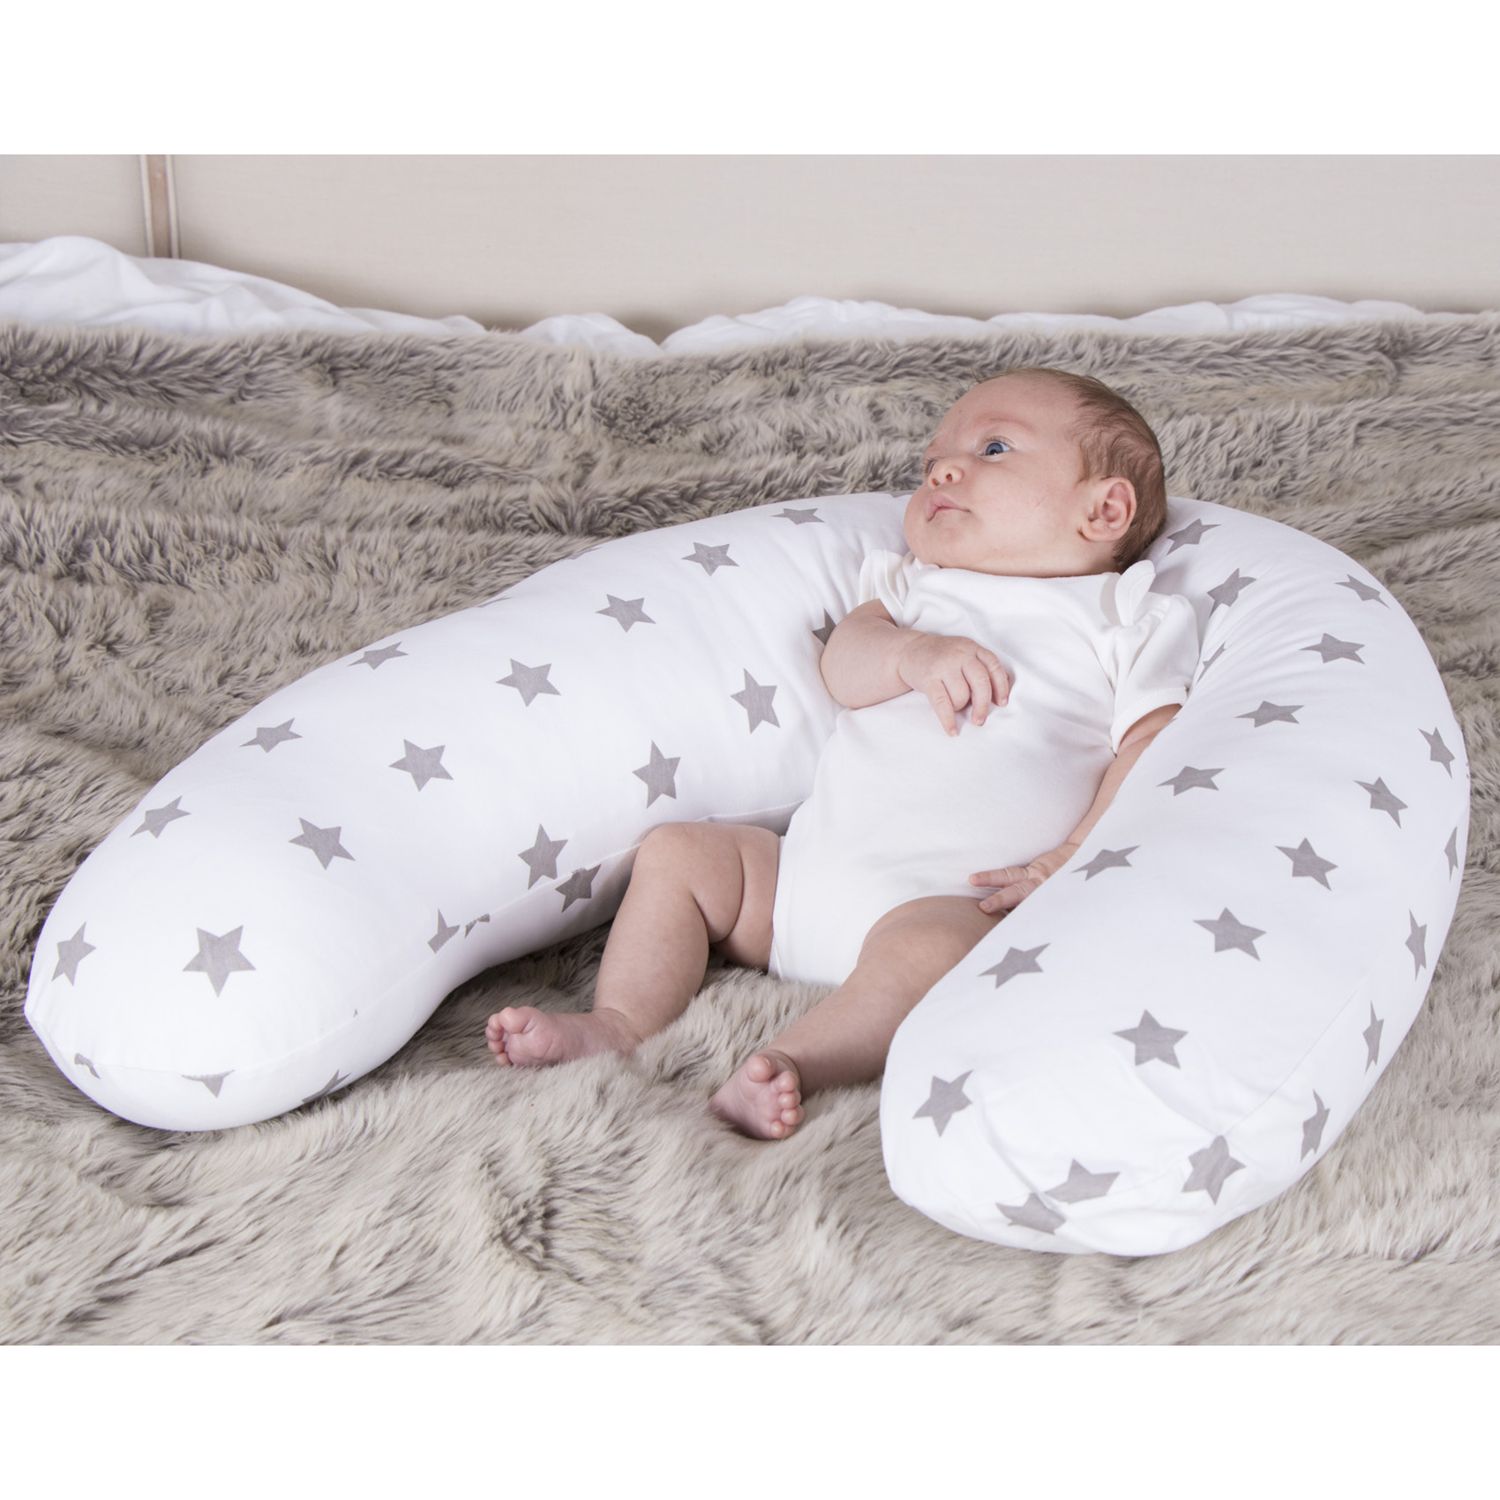 Widgey Plus Multi Use Pregnancy Sleep Pillow Silver Star At